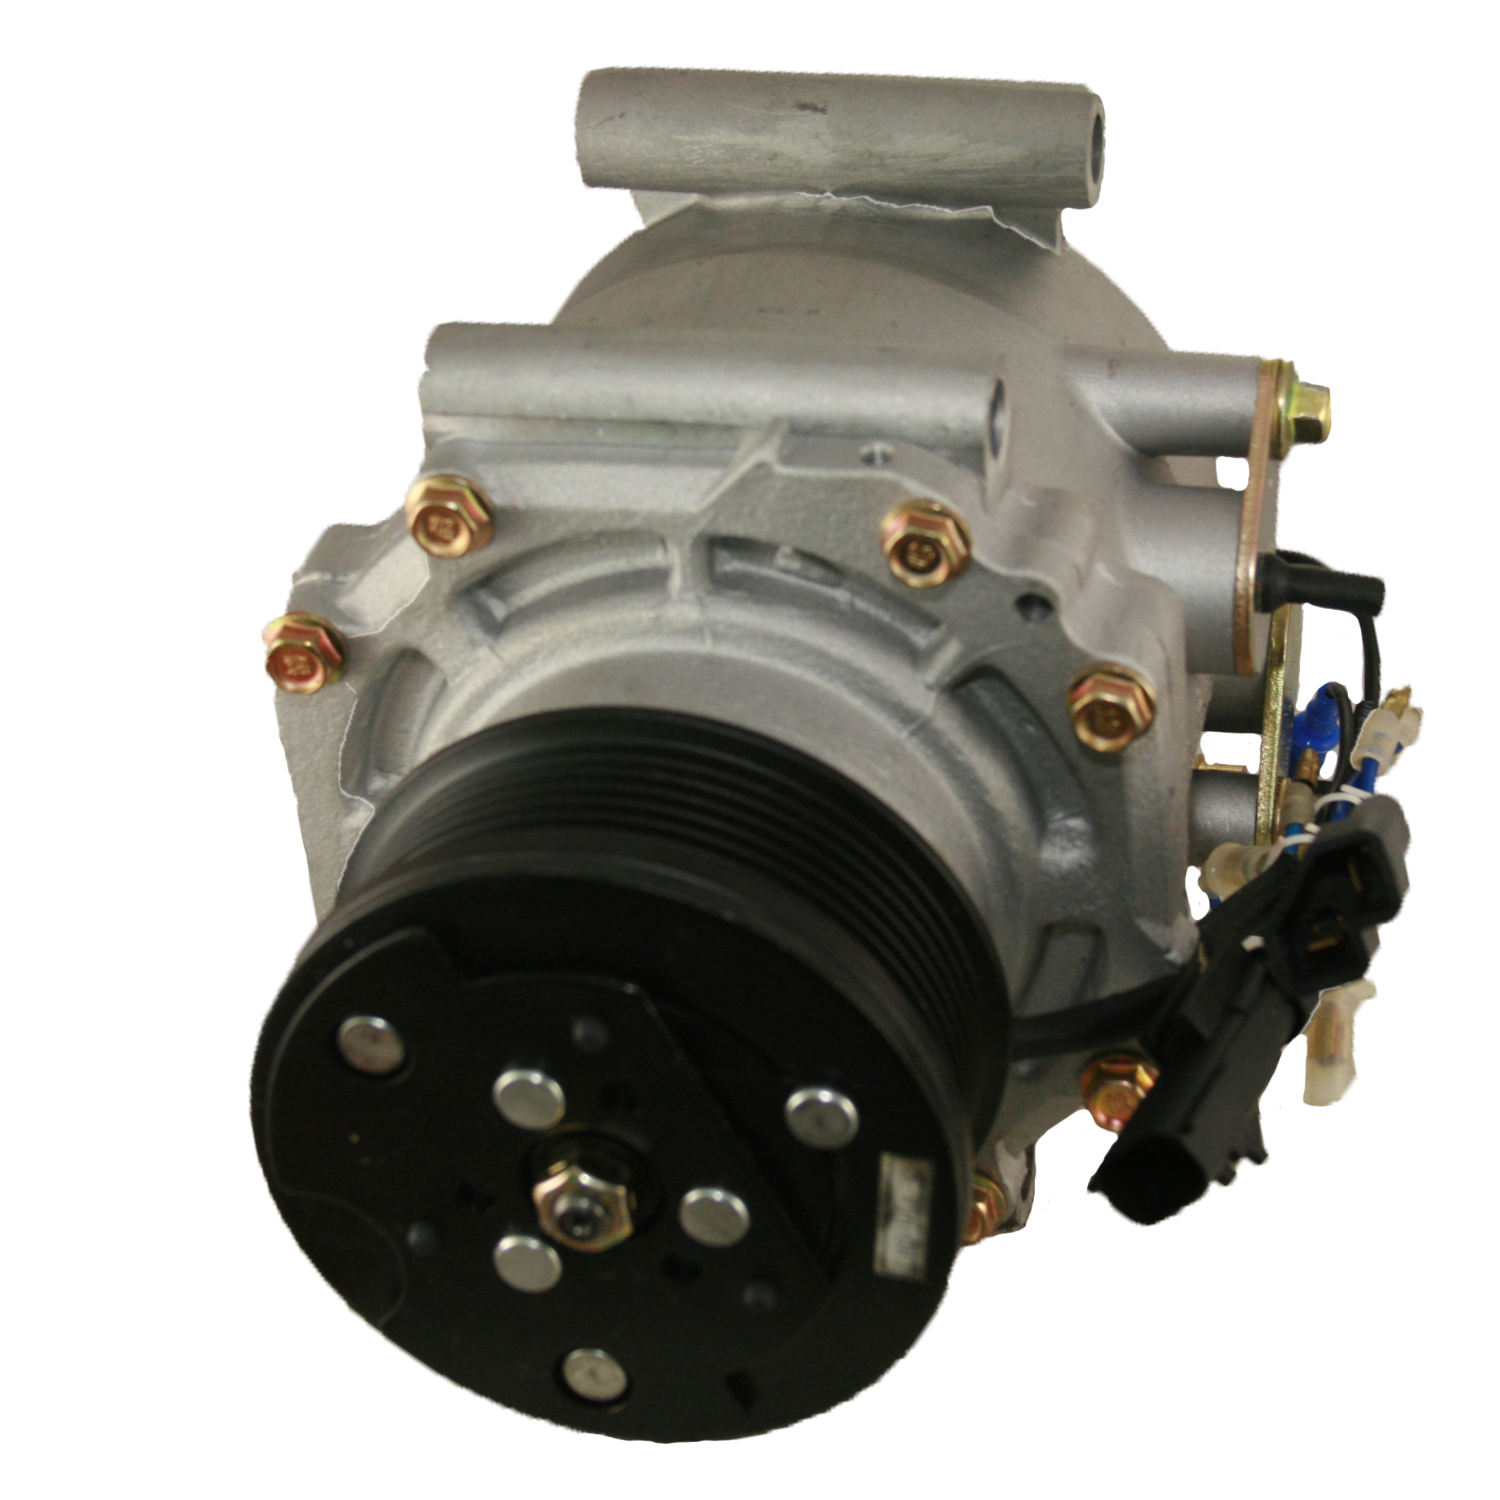 TCW Compressor 40883.701NEW New Product Image field_60b6a13a6e67c